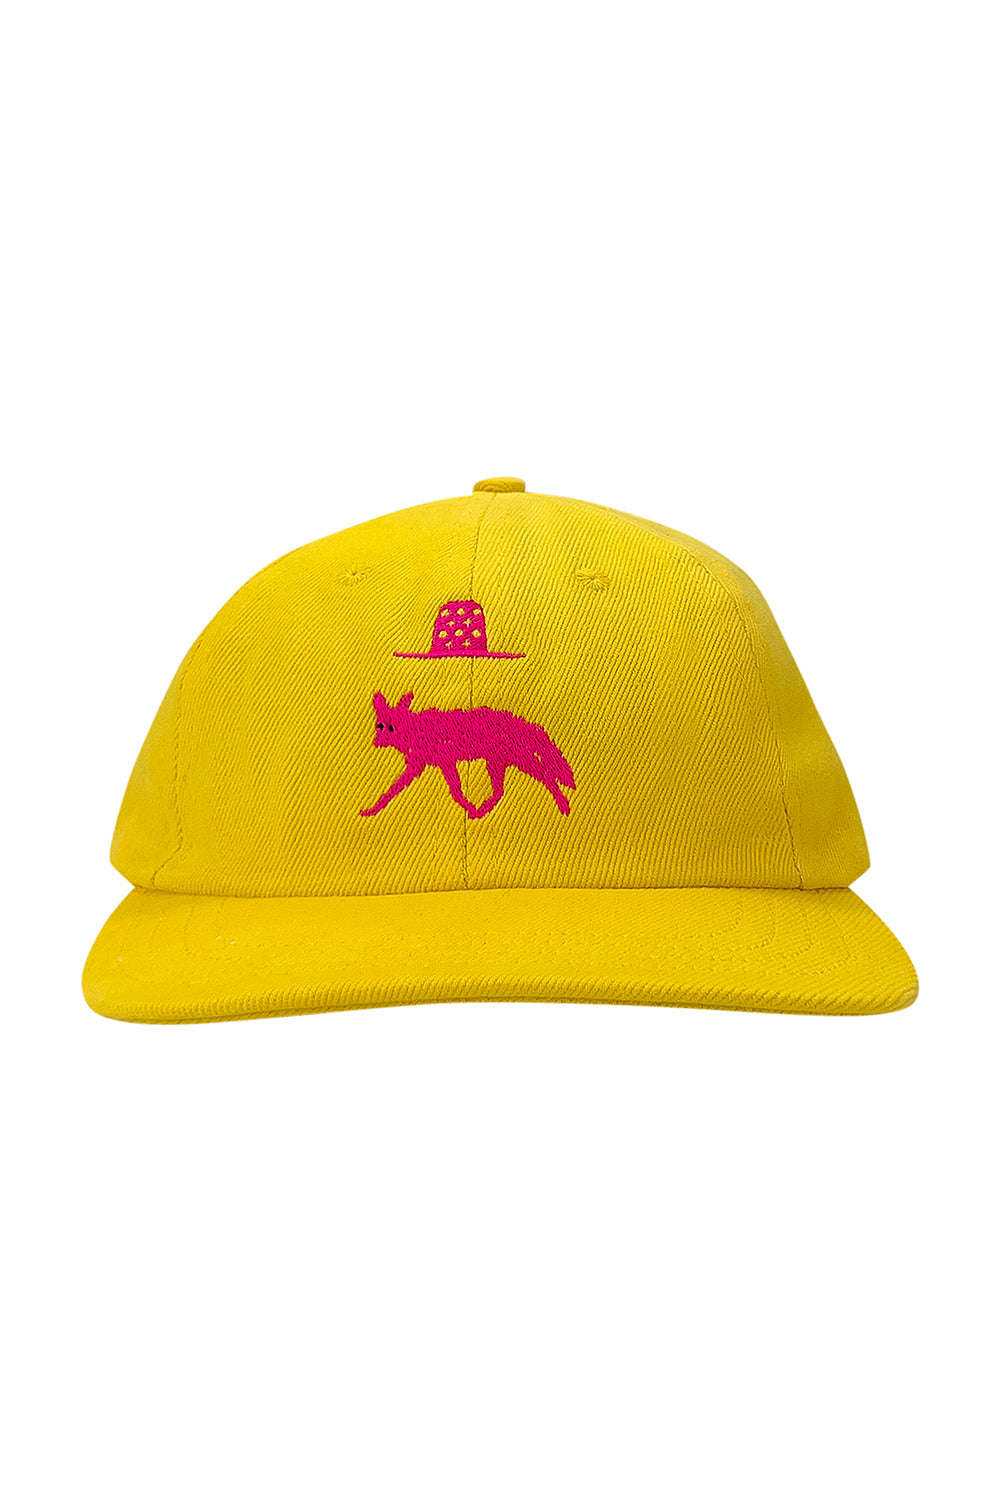 Coyote Twill Cap | Jungmaven Hemp Clothing & Accessories / Color: Sunshine Yellow